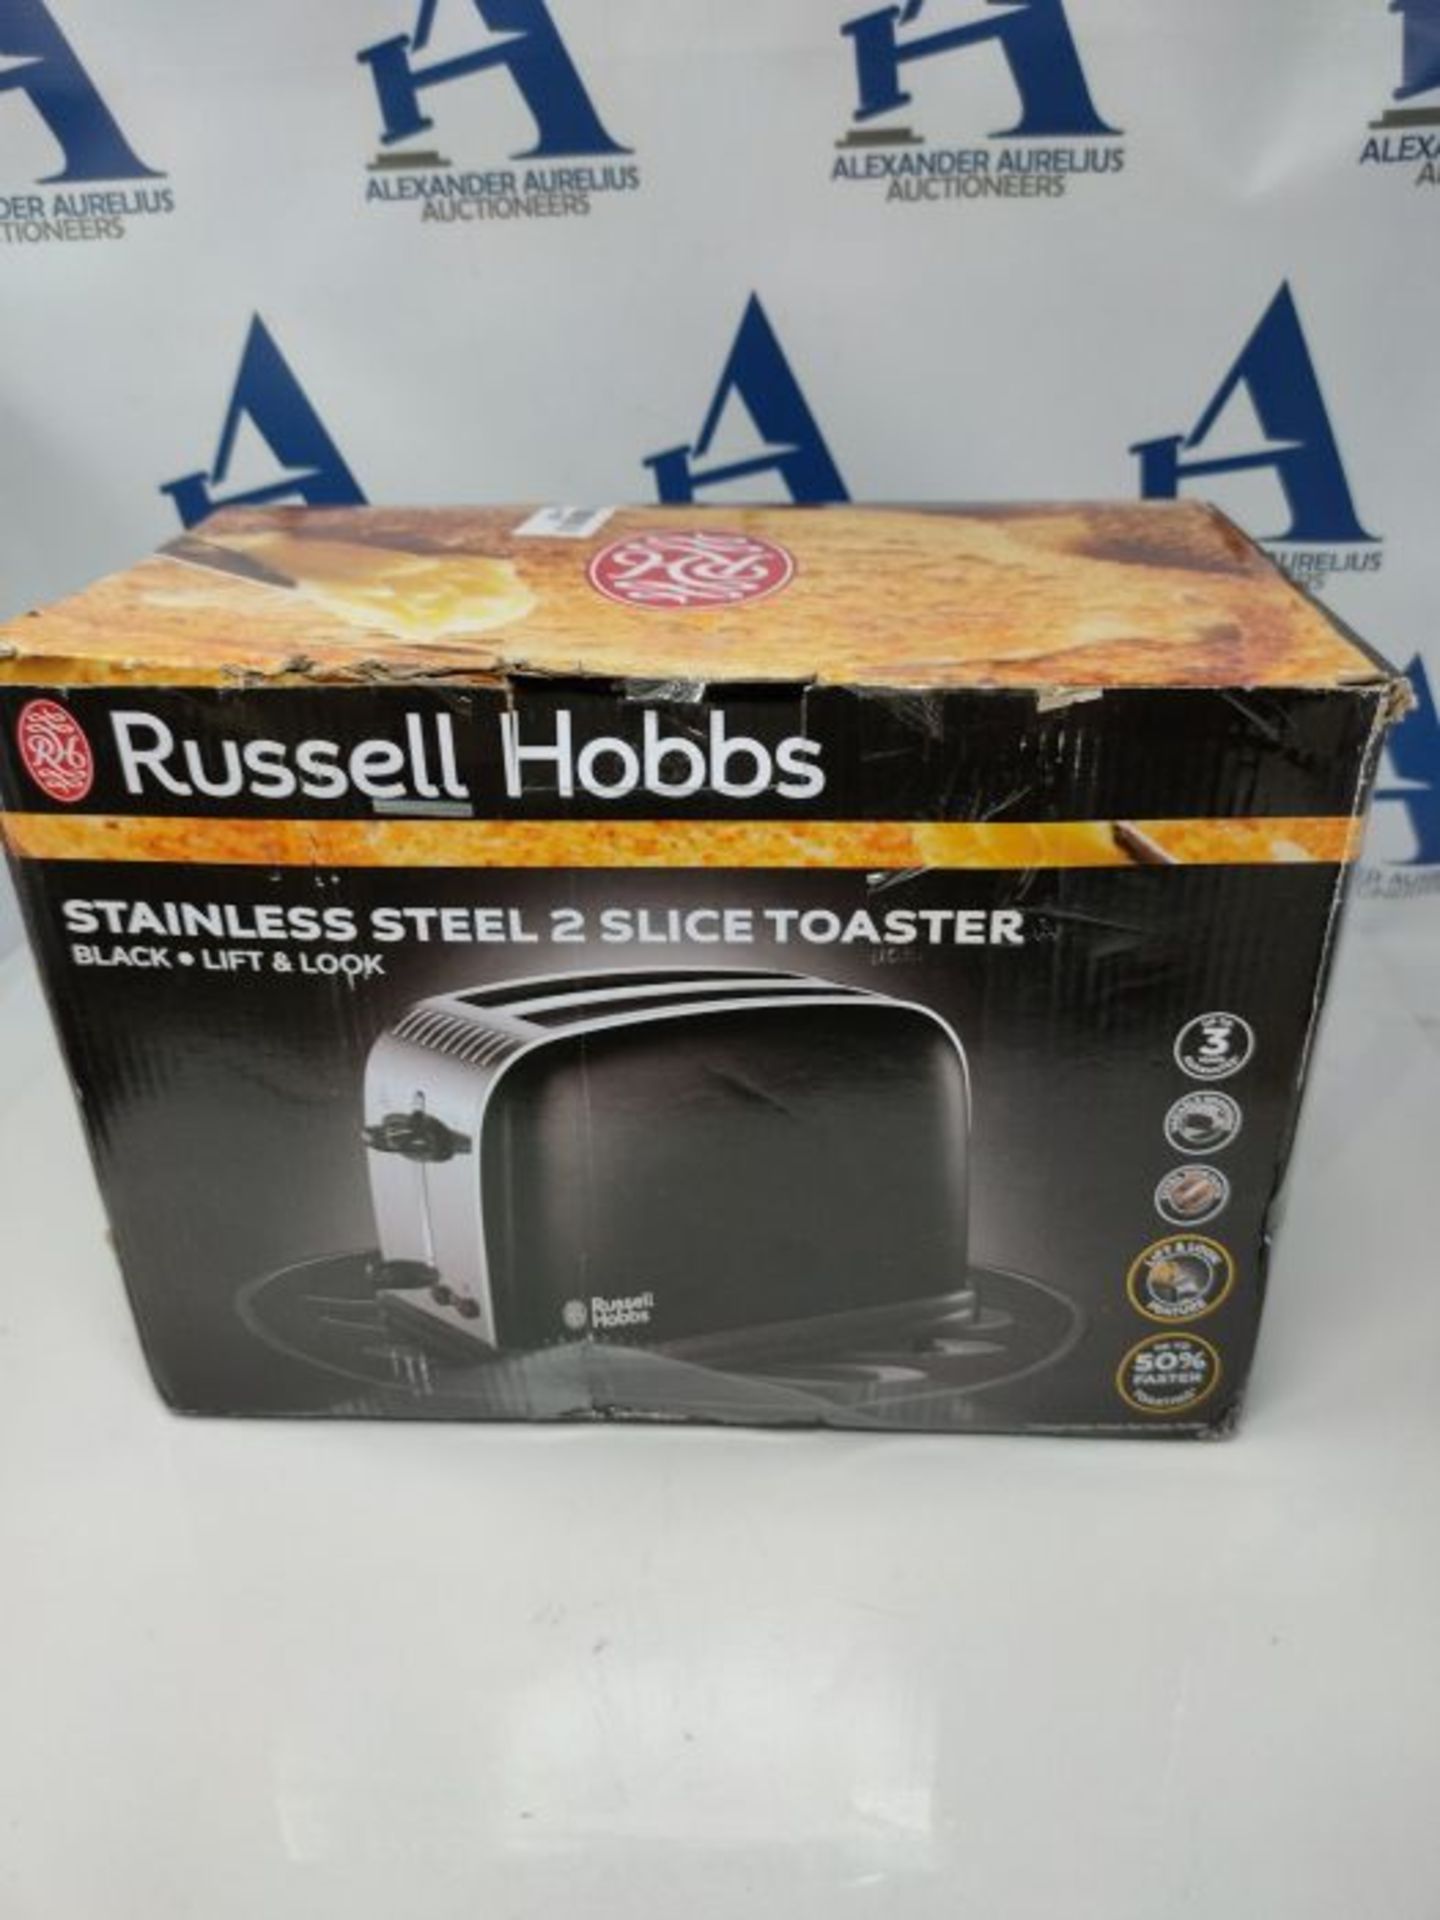 Russell Hobbs 23331 Stainless Steel 2 Slice Toaster, Black - Image 2 of 3